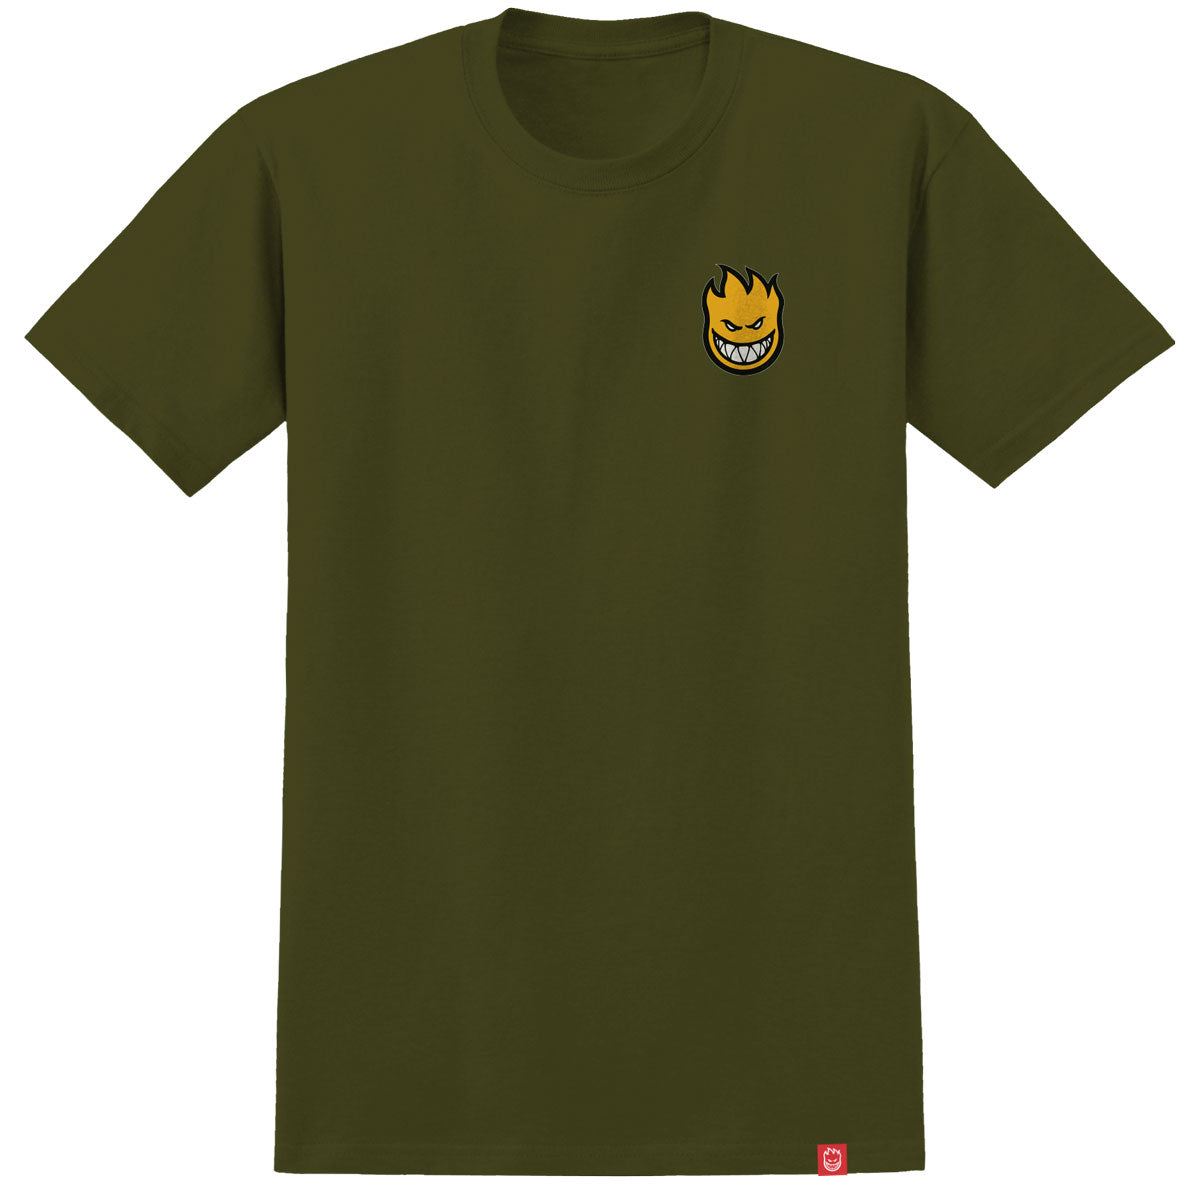 Spitfire Lil Bighead Fill T-Shirt - Military Green/Black/Gold image 1